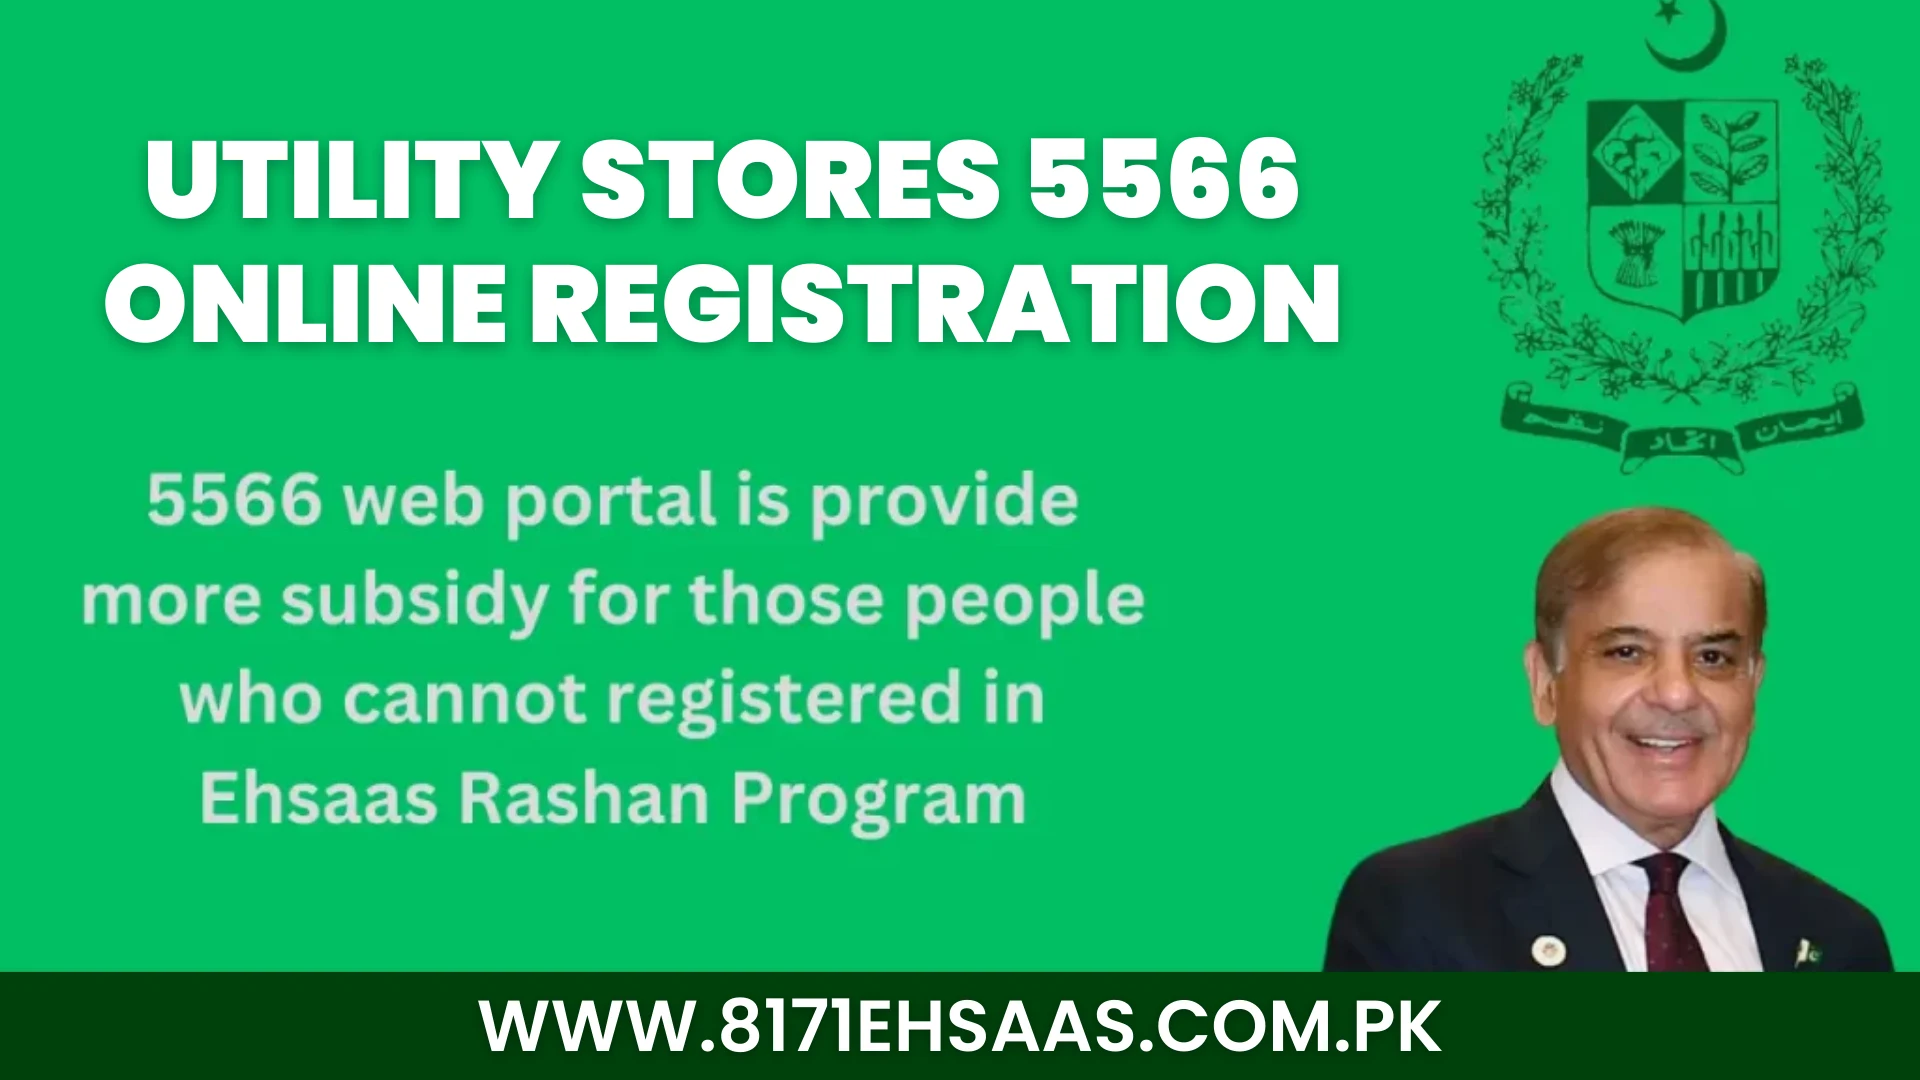 Utility stores 5566 Online Registration